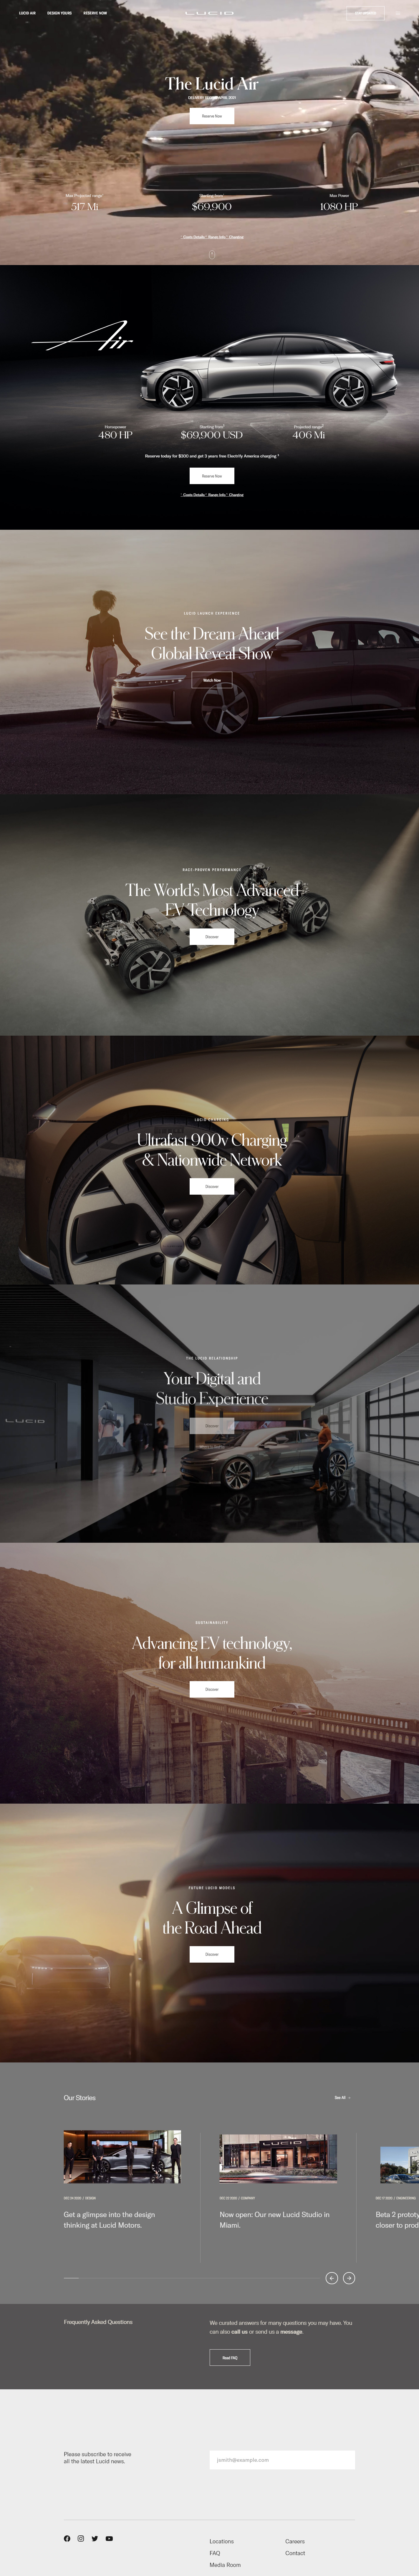 lucid电动汽车网站设计